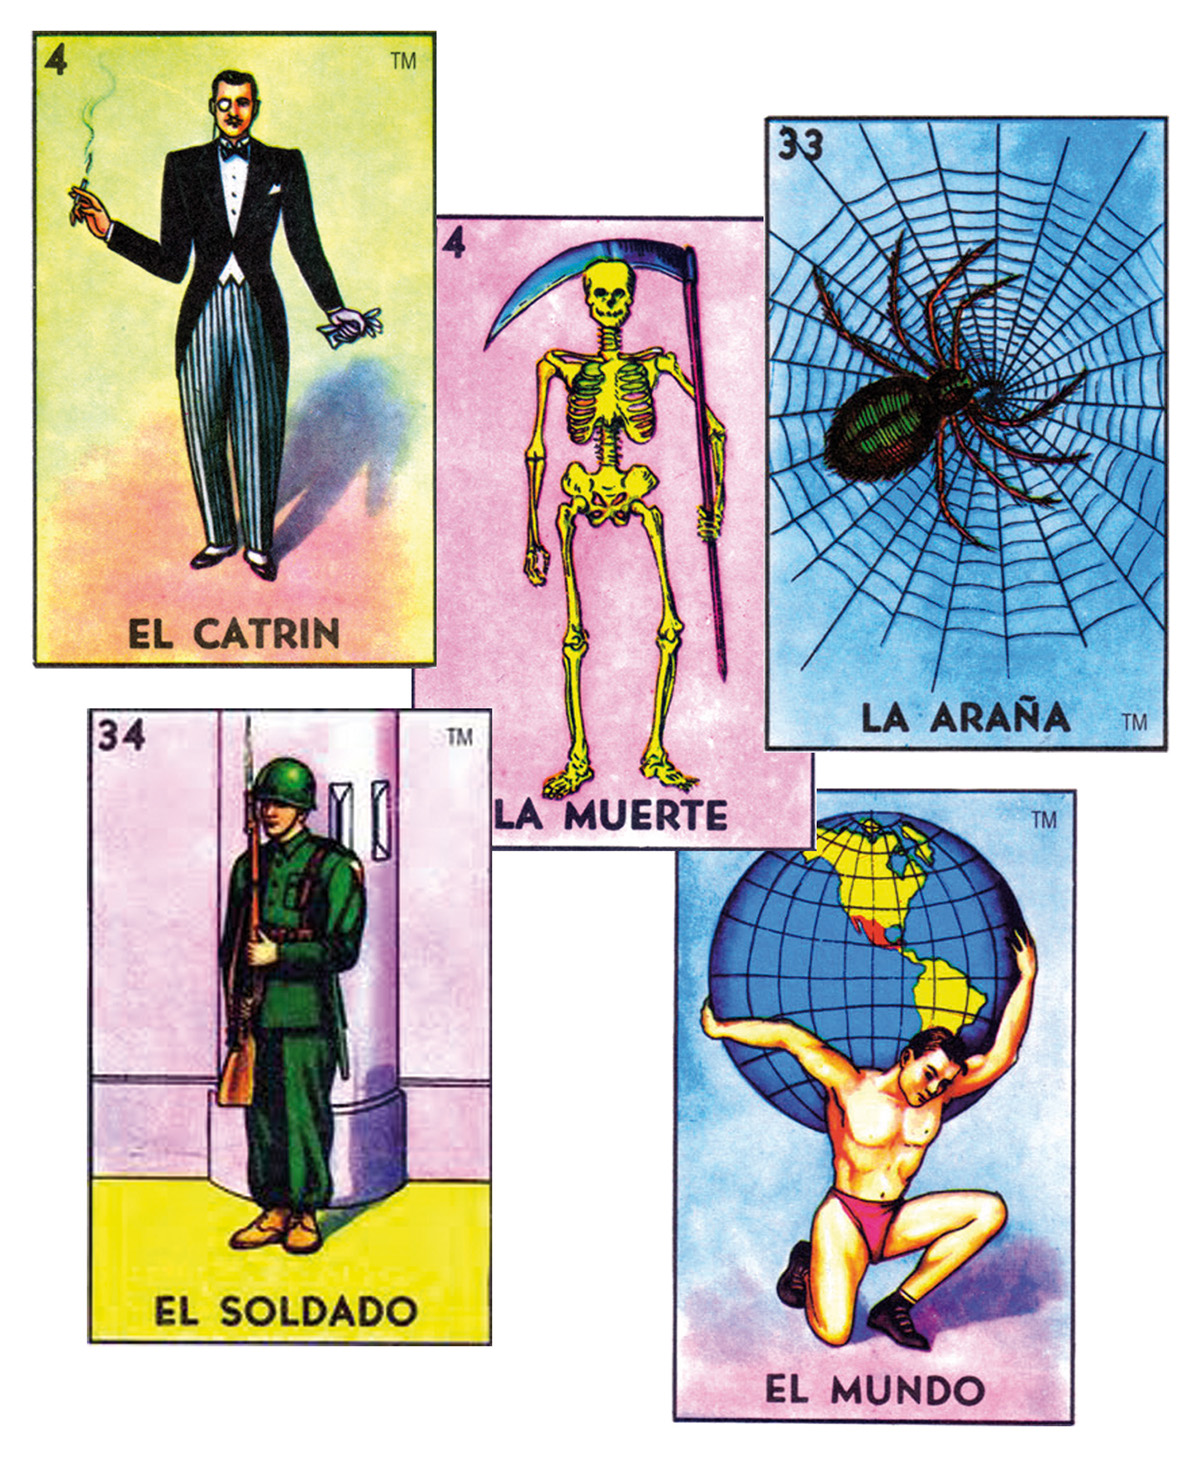 art deco art deco loteria mexico mexicana Catrin Muerte OZ araña soldado cartas card